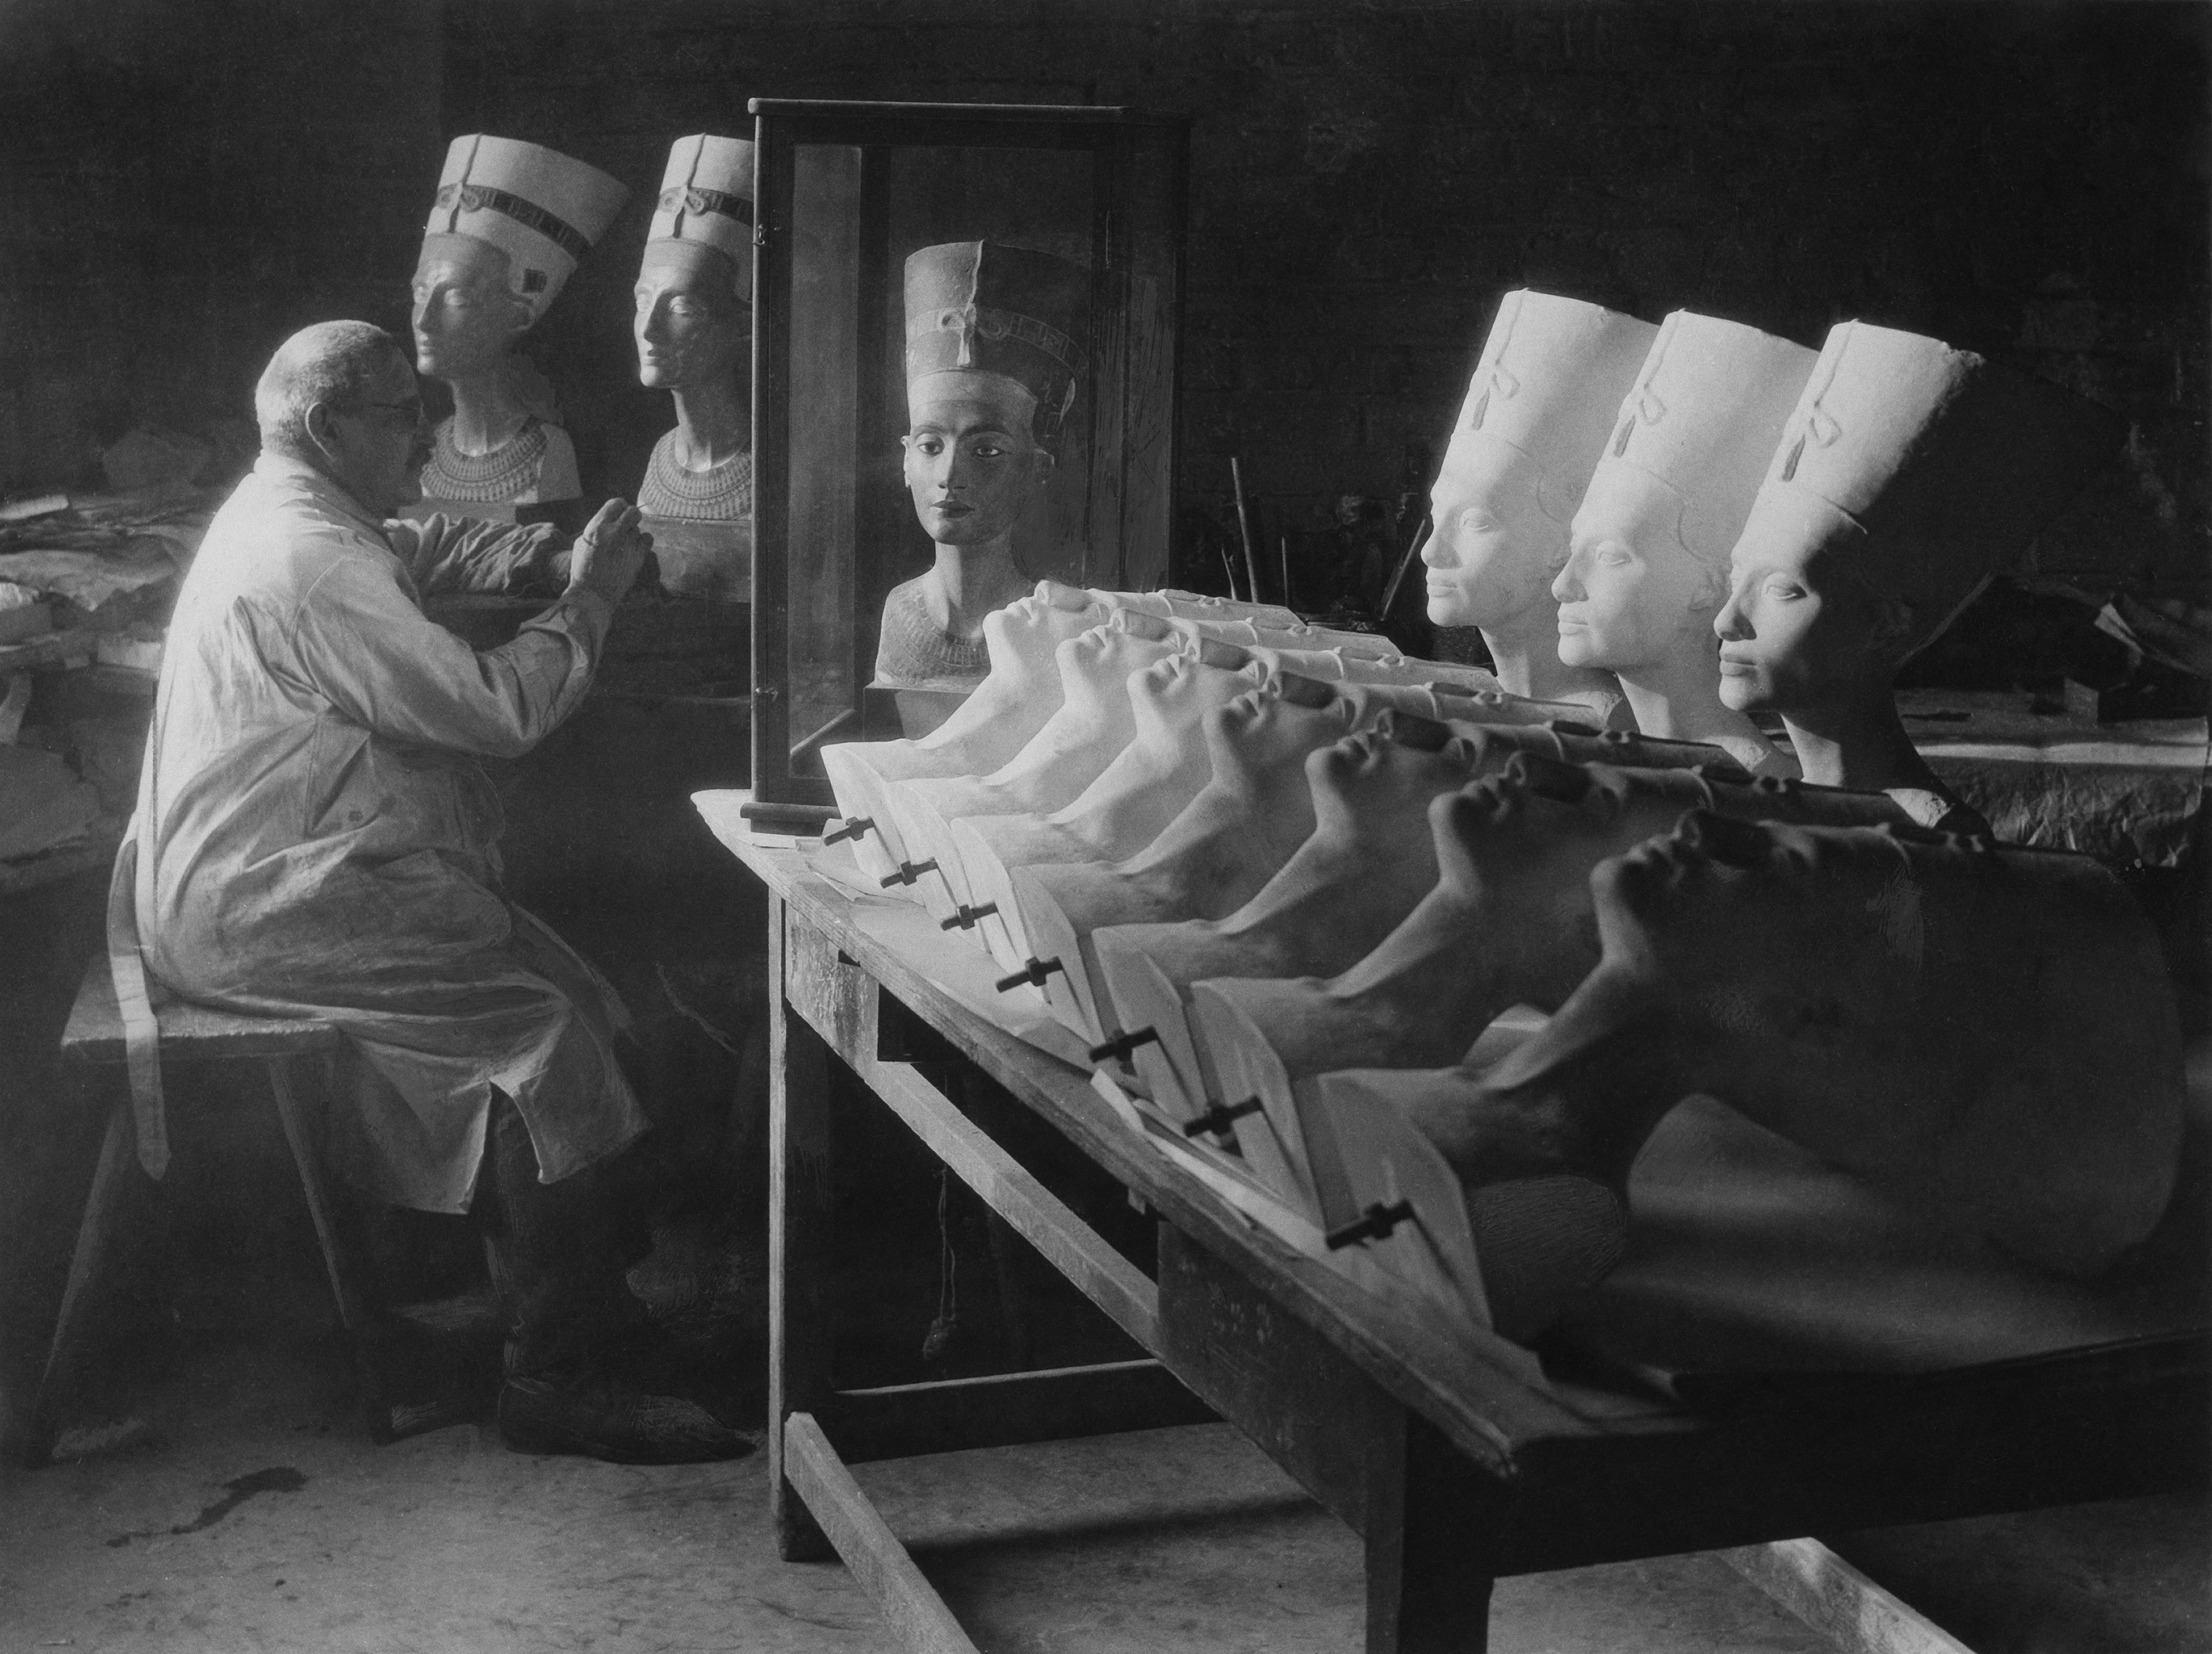  Fritz Zielesch, Dans l’atelier des moulages des musées de Berlin, Allemagne, vers 1930. Photographie, 18 x 24 cm. Collection Ullstein Bild © Ullstein Bild / Roger-Viollet